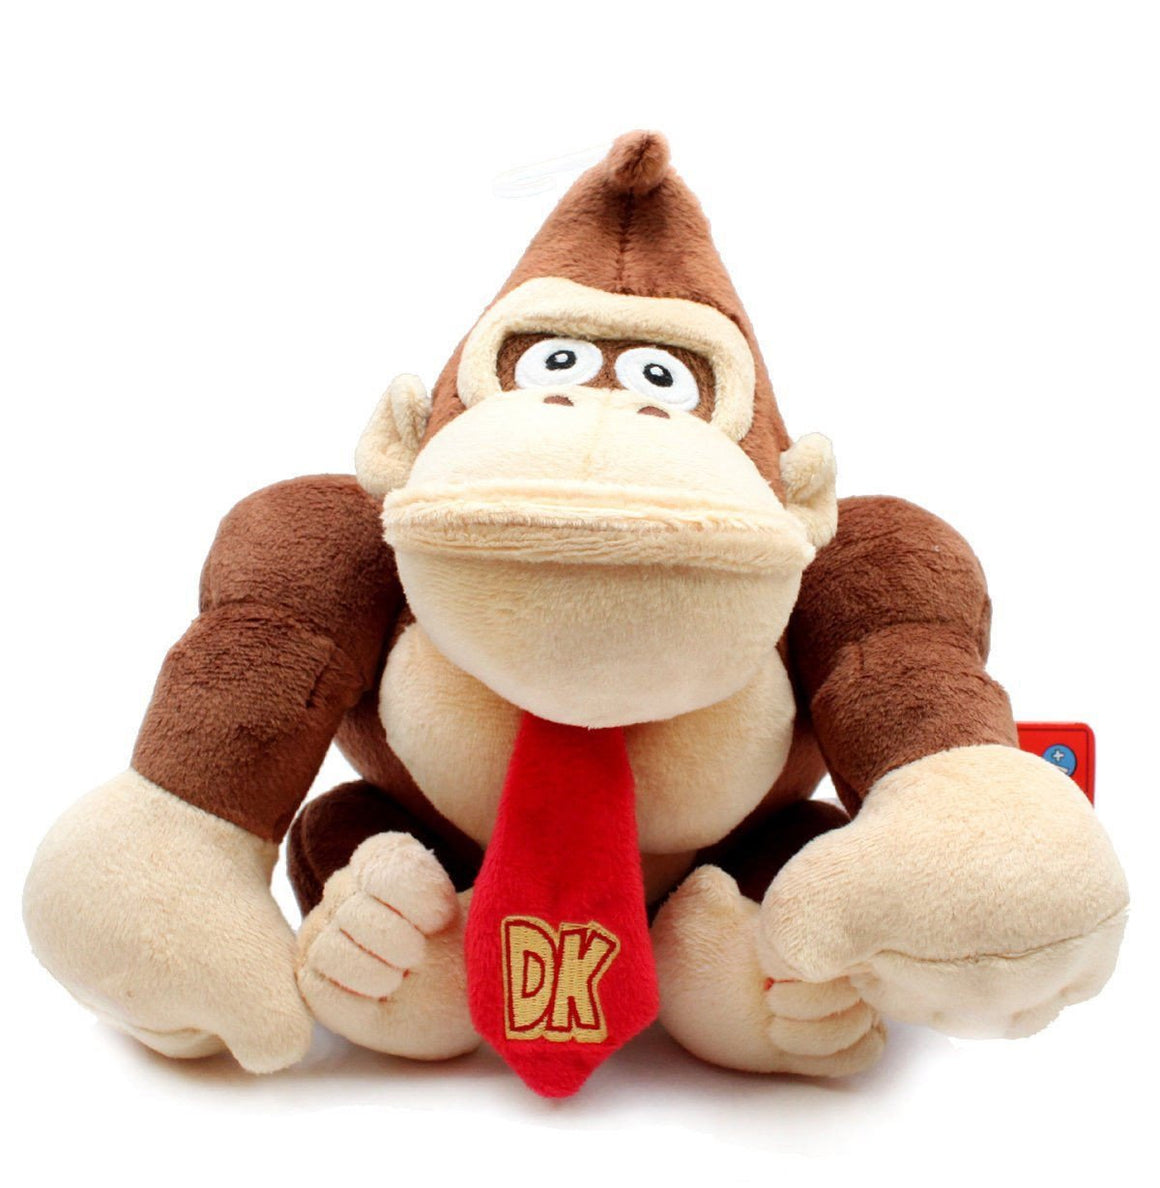 New Xmas Stuffed Toys Super Mario Bro 9in Donkey Kong Character Figure Plush Toy Cuddly Stuffed Animal Dolls Gifts